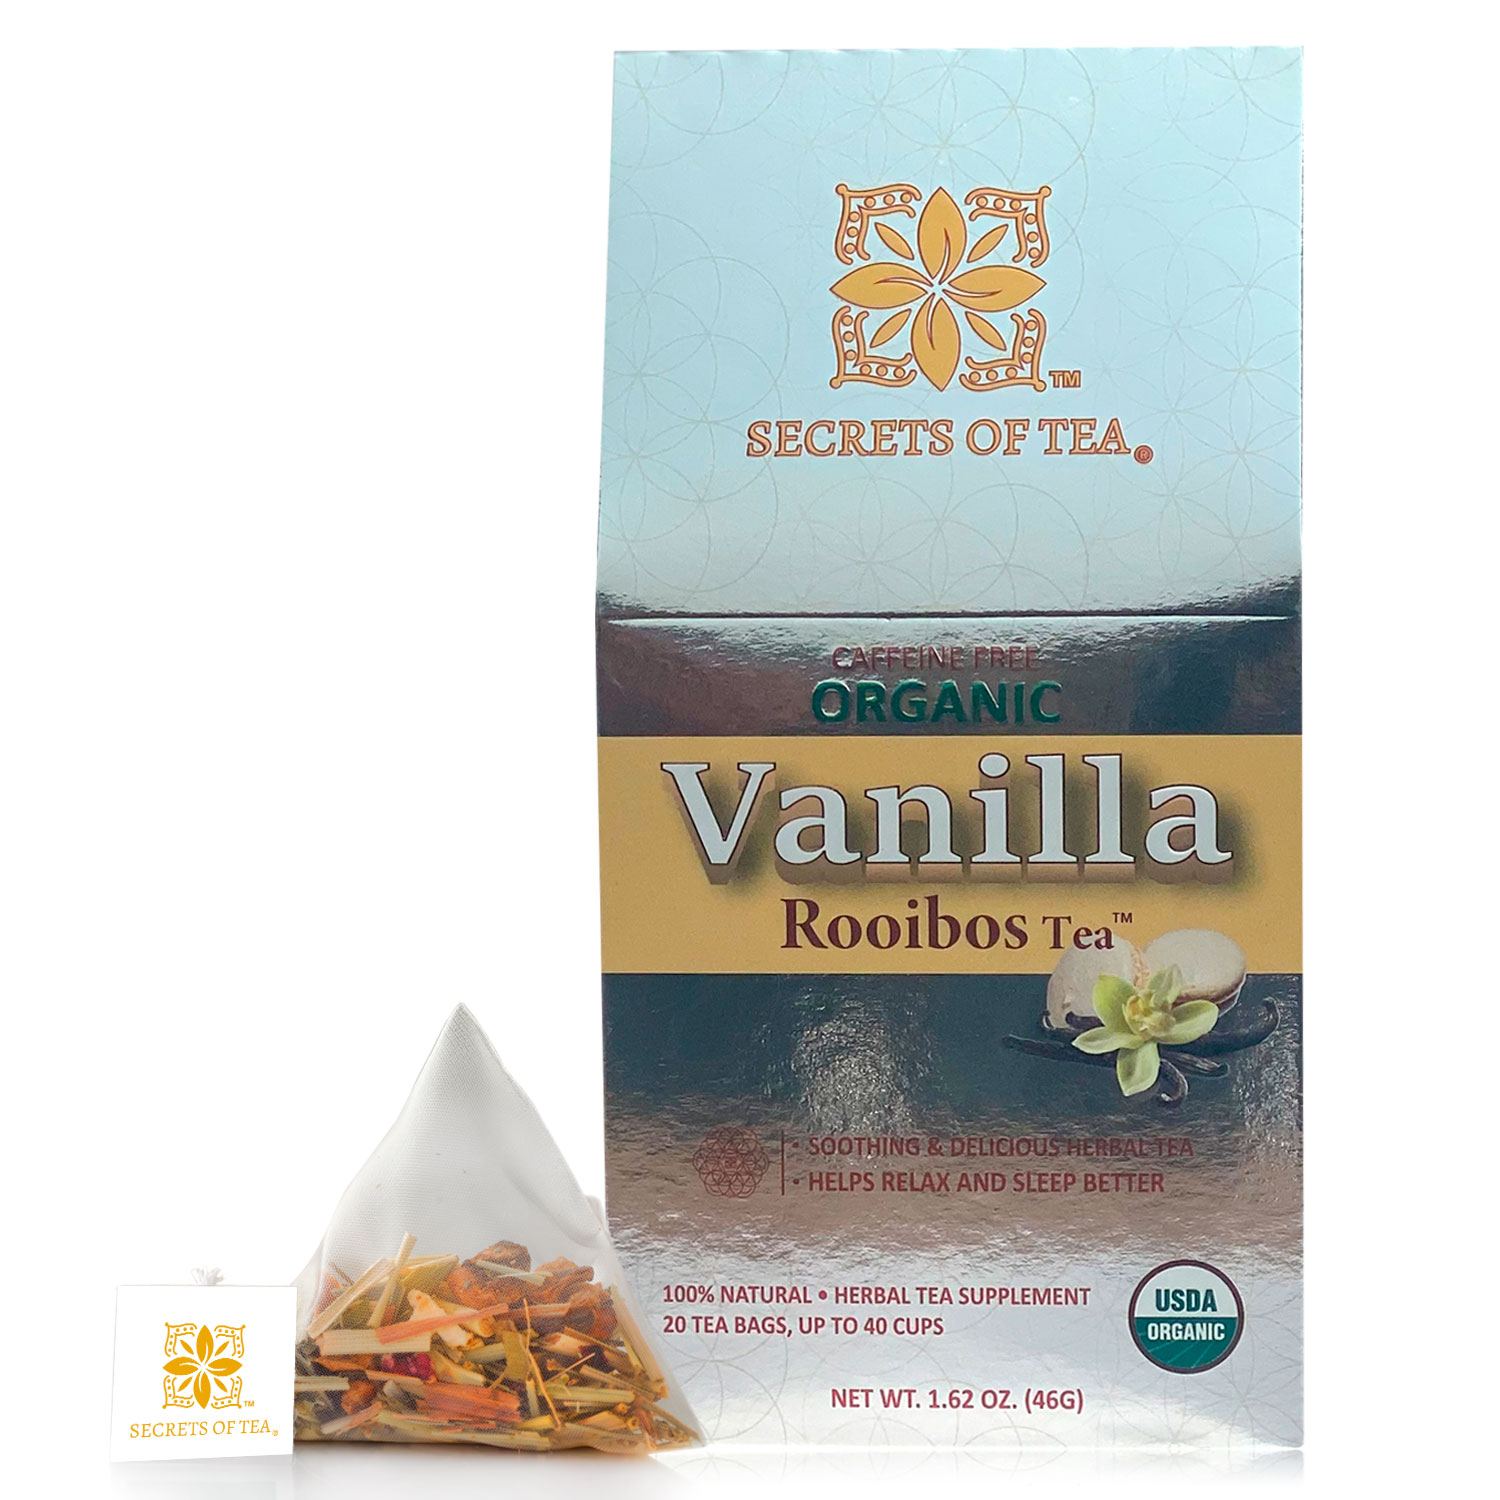 Secrets of Tea Vanilla Rooibos Tea 2 innerpacks per case 2.0 oz